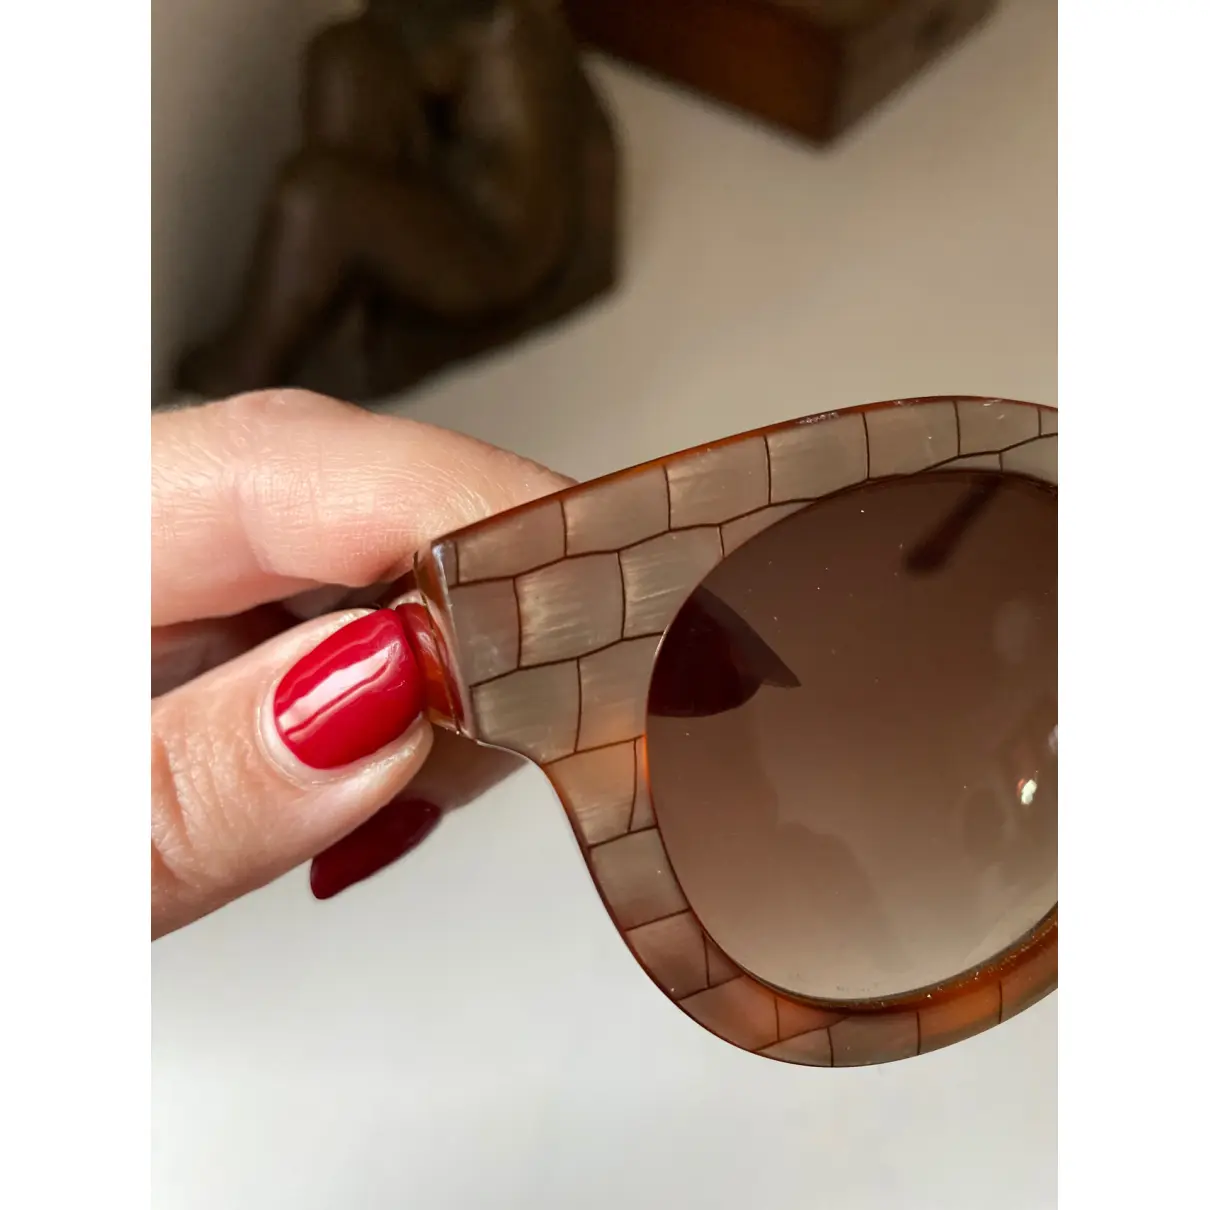 Luxury Thierry Lasry Sunglasses Women